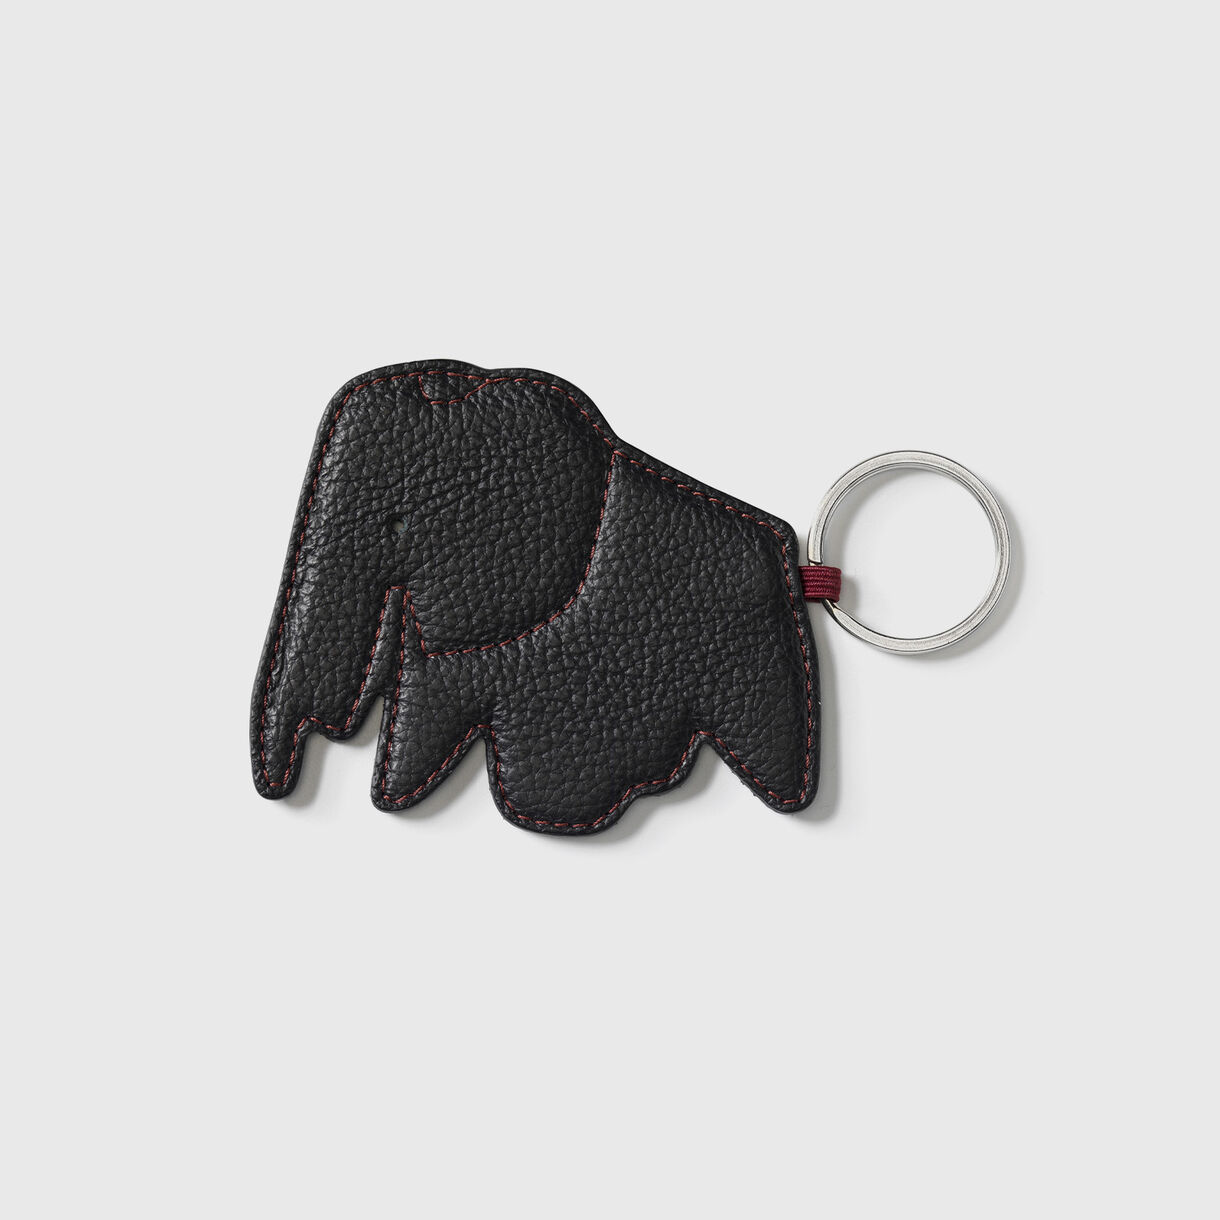 Elephant Key Ring, Black